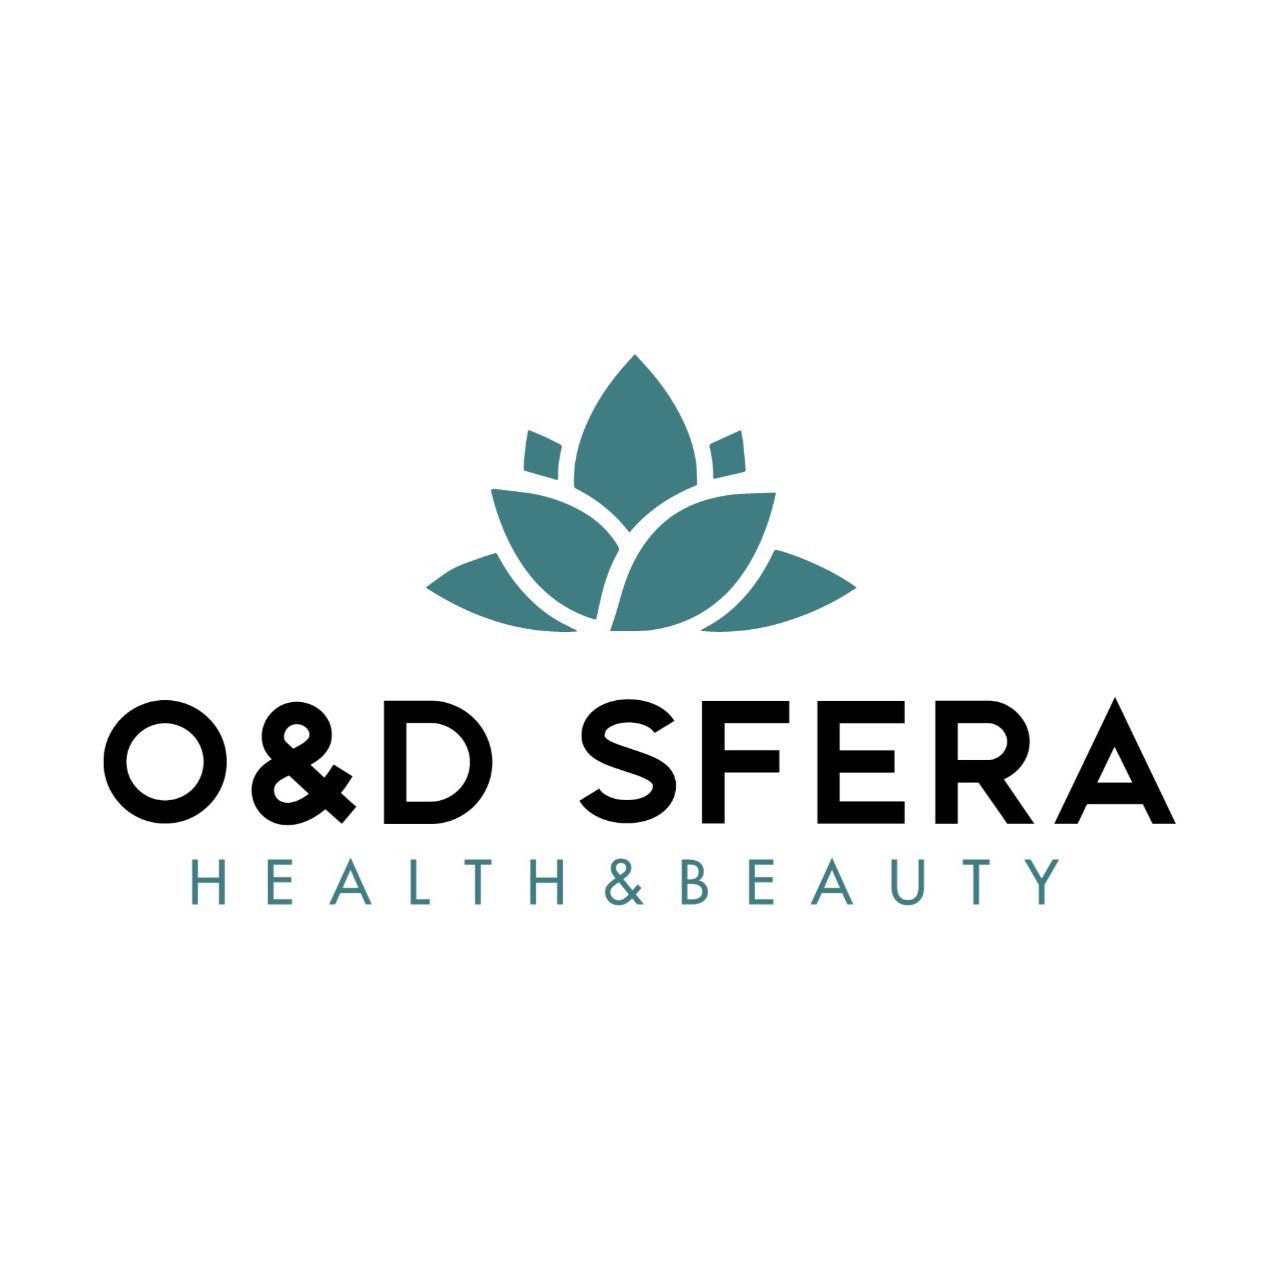 O&D Sfera Health&Beauty, Sielska, 6/10, 60-129, Poznań, Grunwald